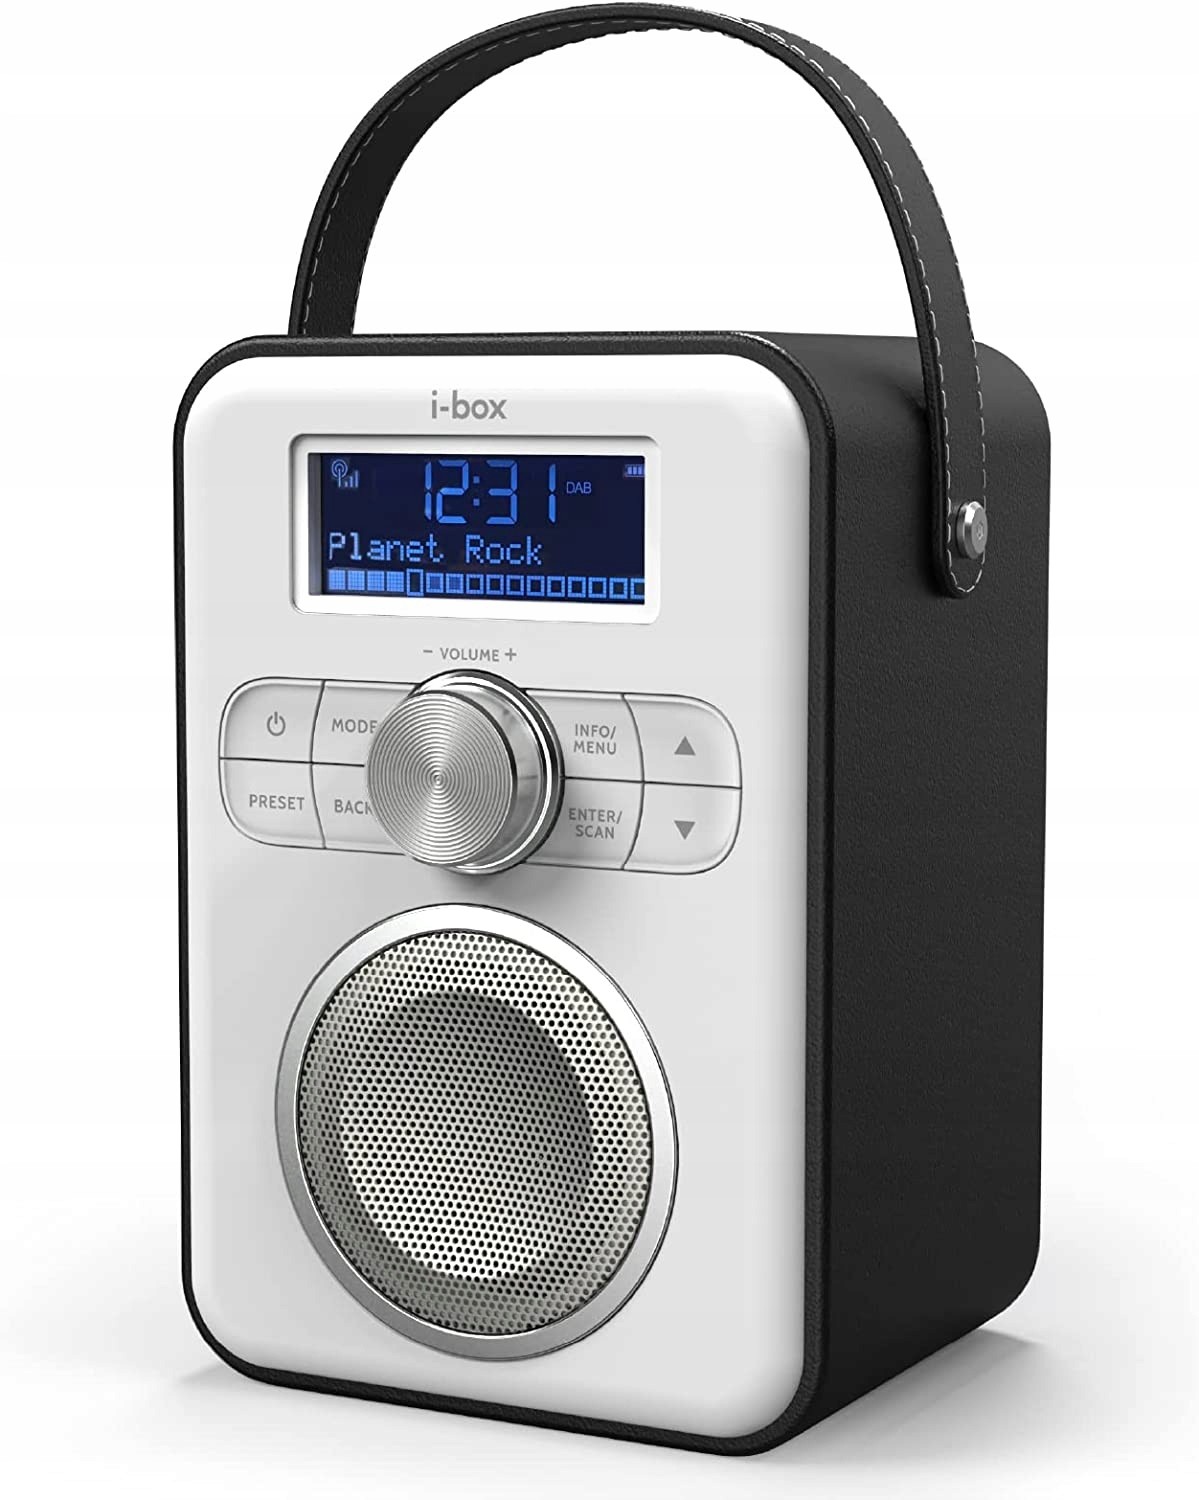 Přenosné Bateriové Rádio I-box Tune Dab+ Fm